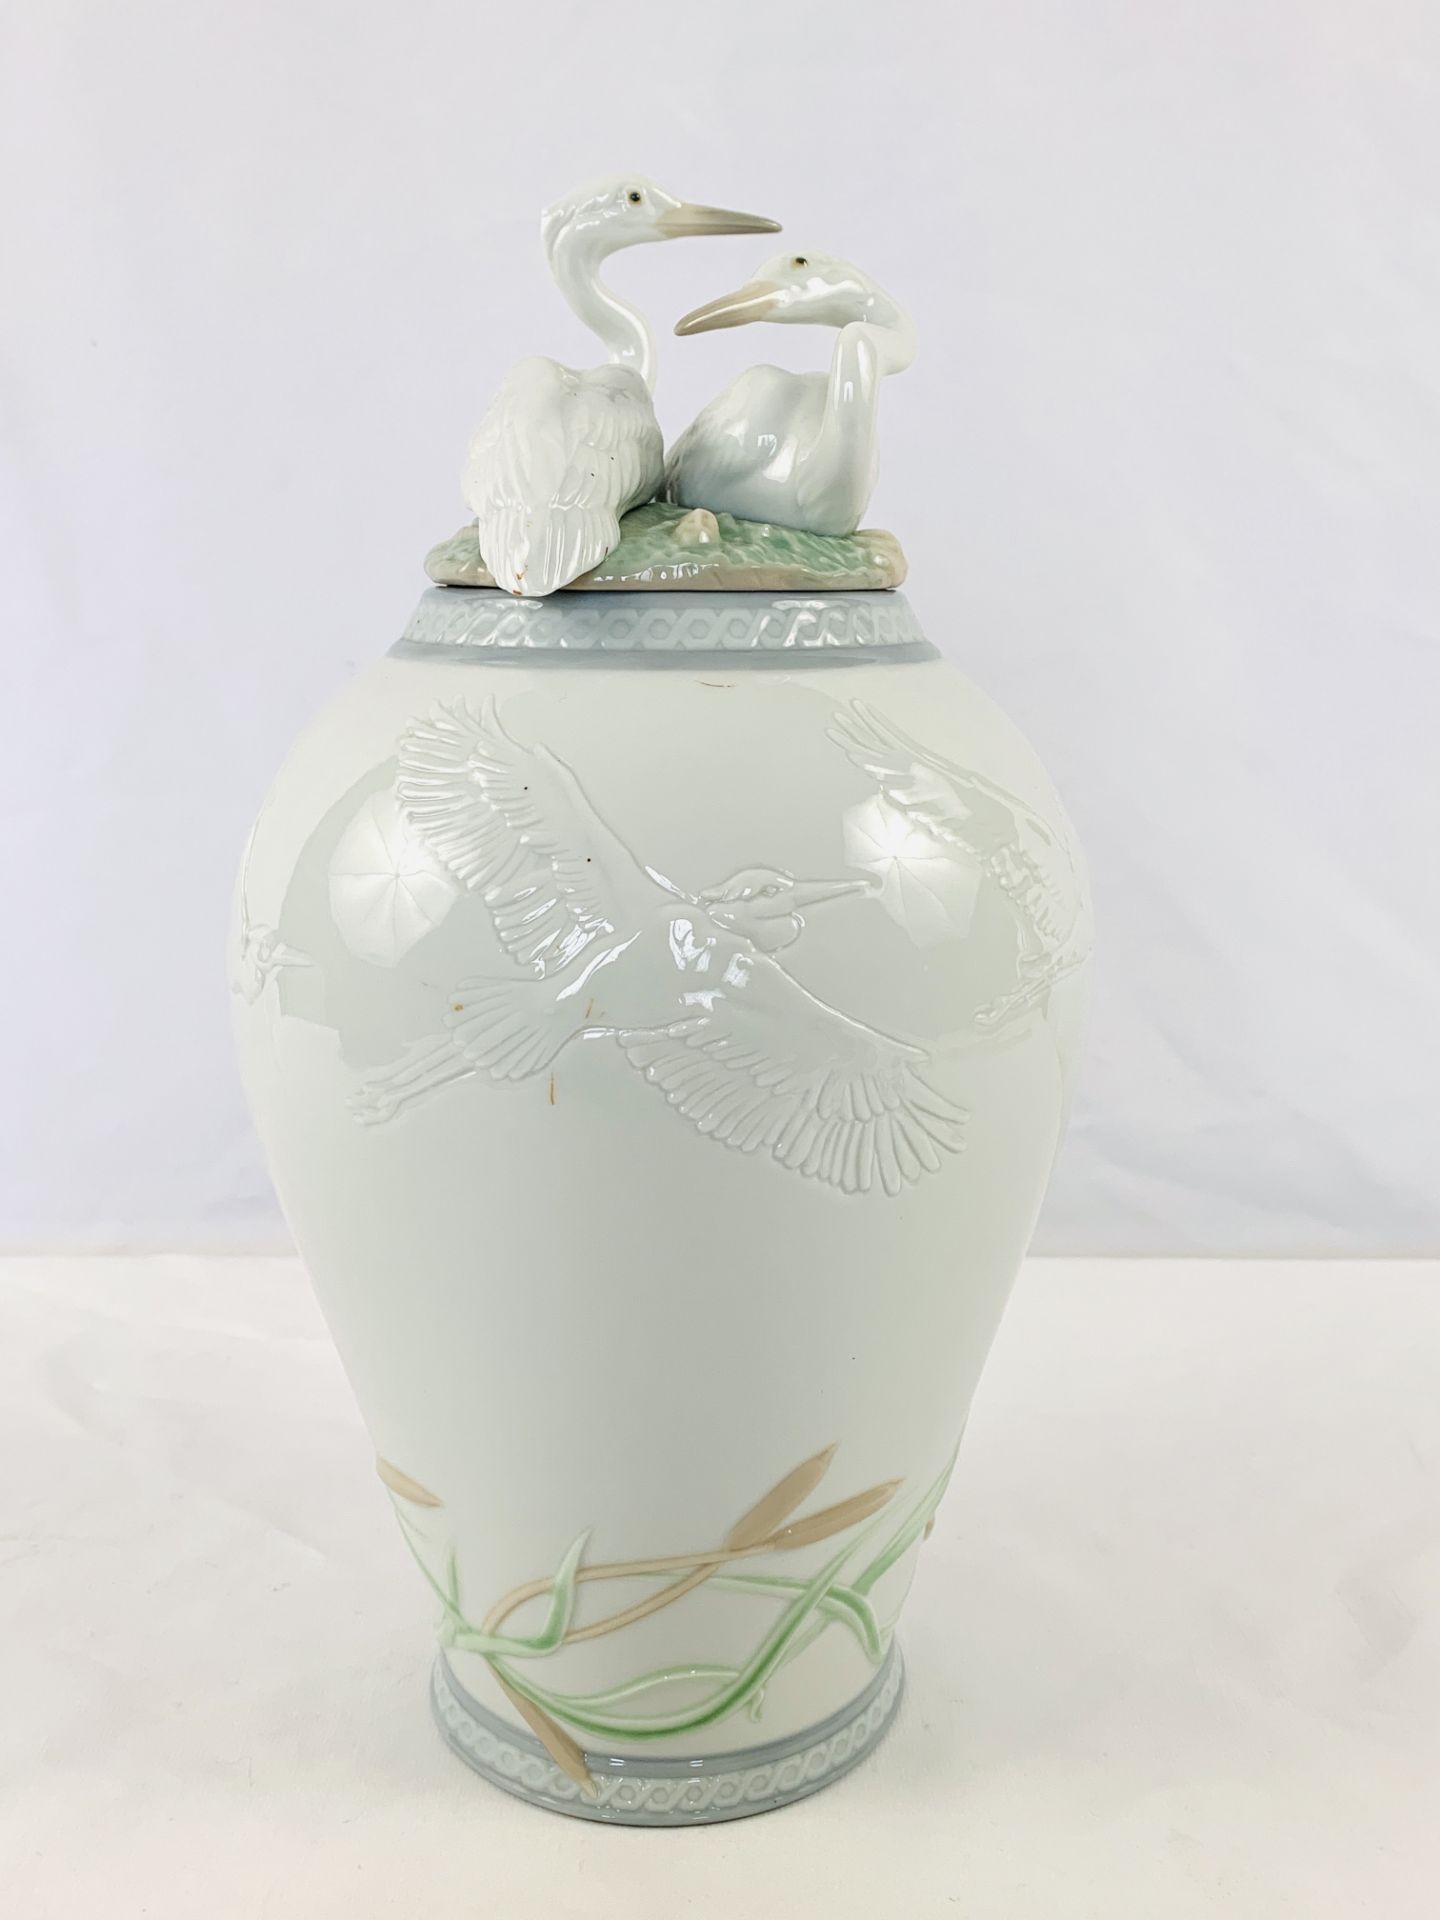 Lladro 'Herons Realm' lidded vase - Image 2 of 5